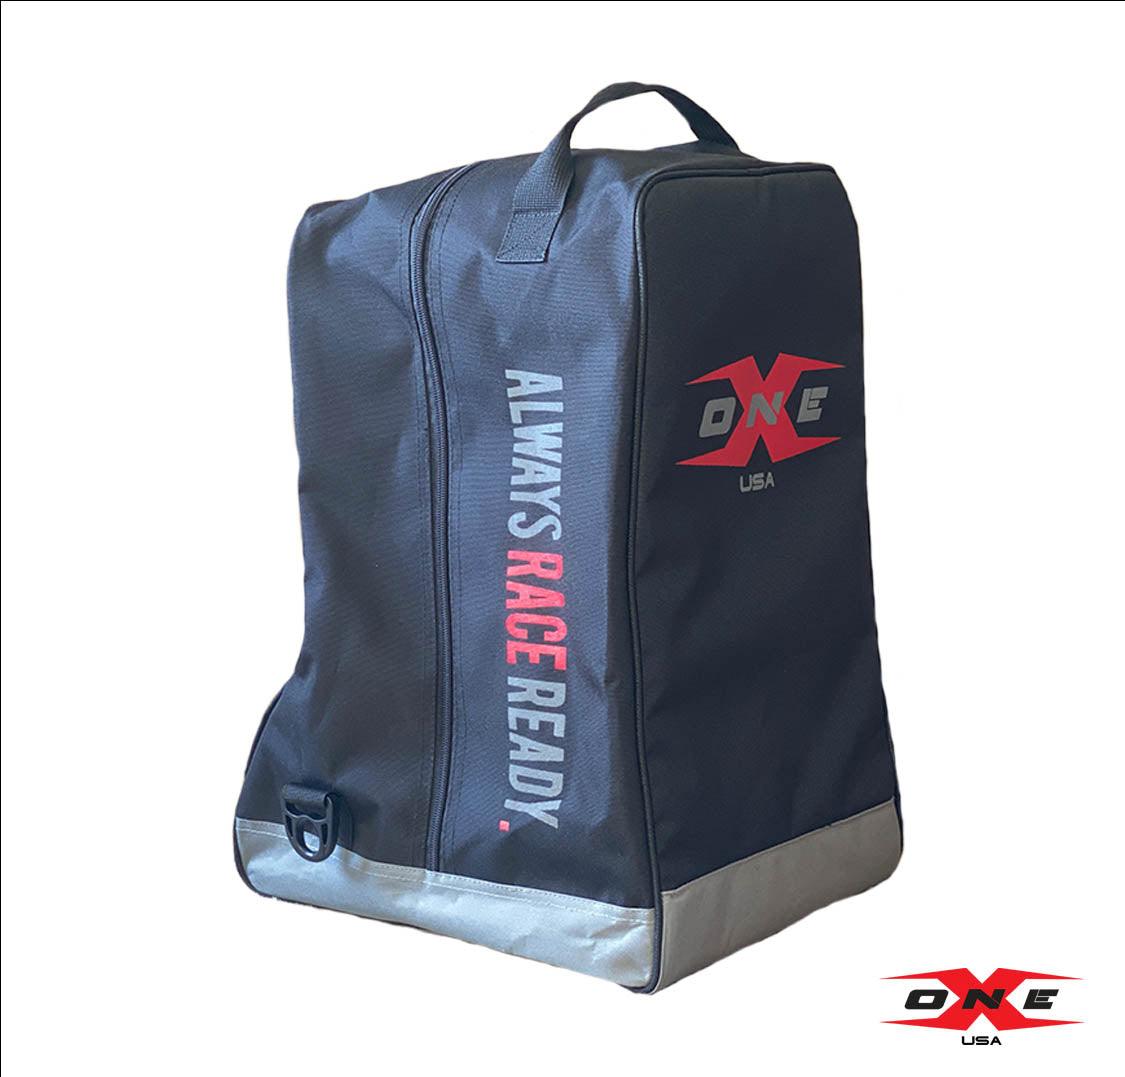 OneX USA Boot Bag - Always Race Ready. - OneX USA